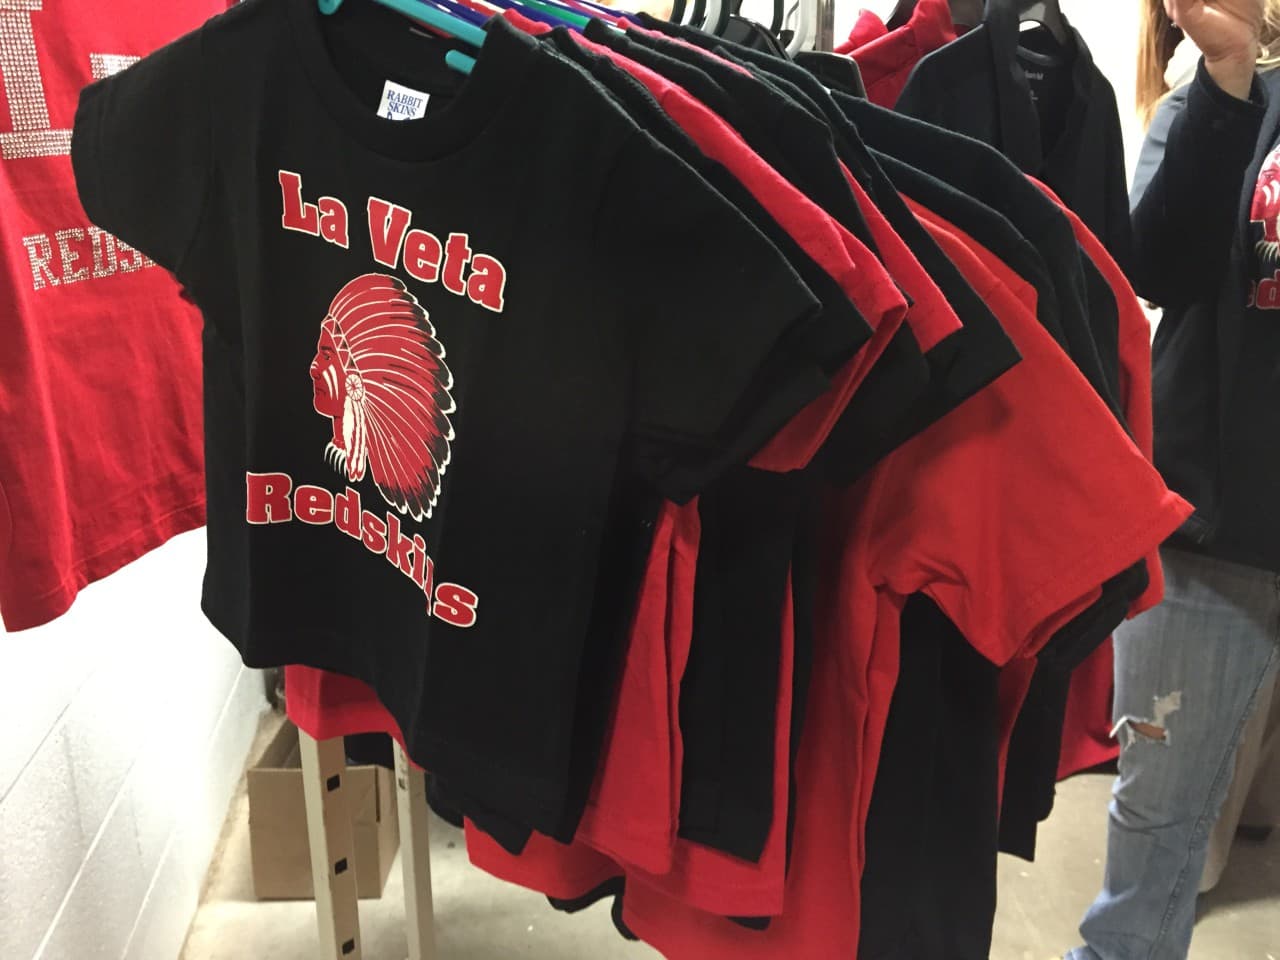 Shirts for sale at a La Veta, Colo., high school basketball game. (Rachel Estabrook/OAG)